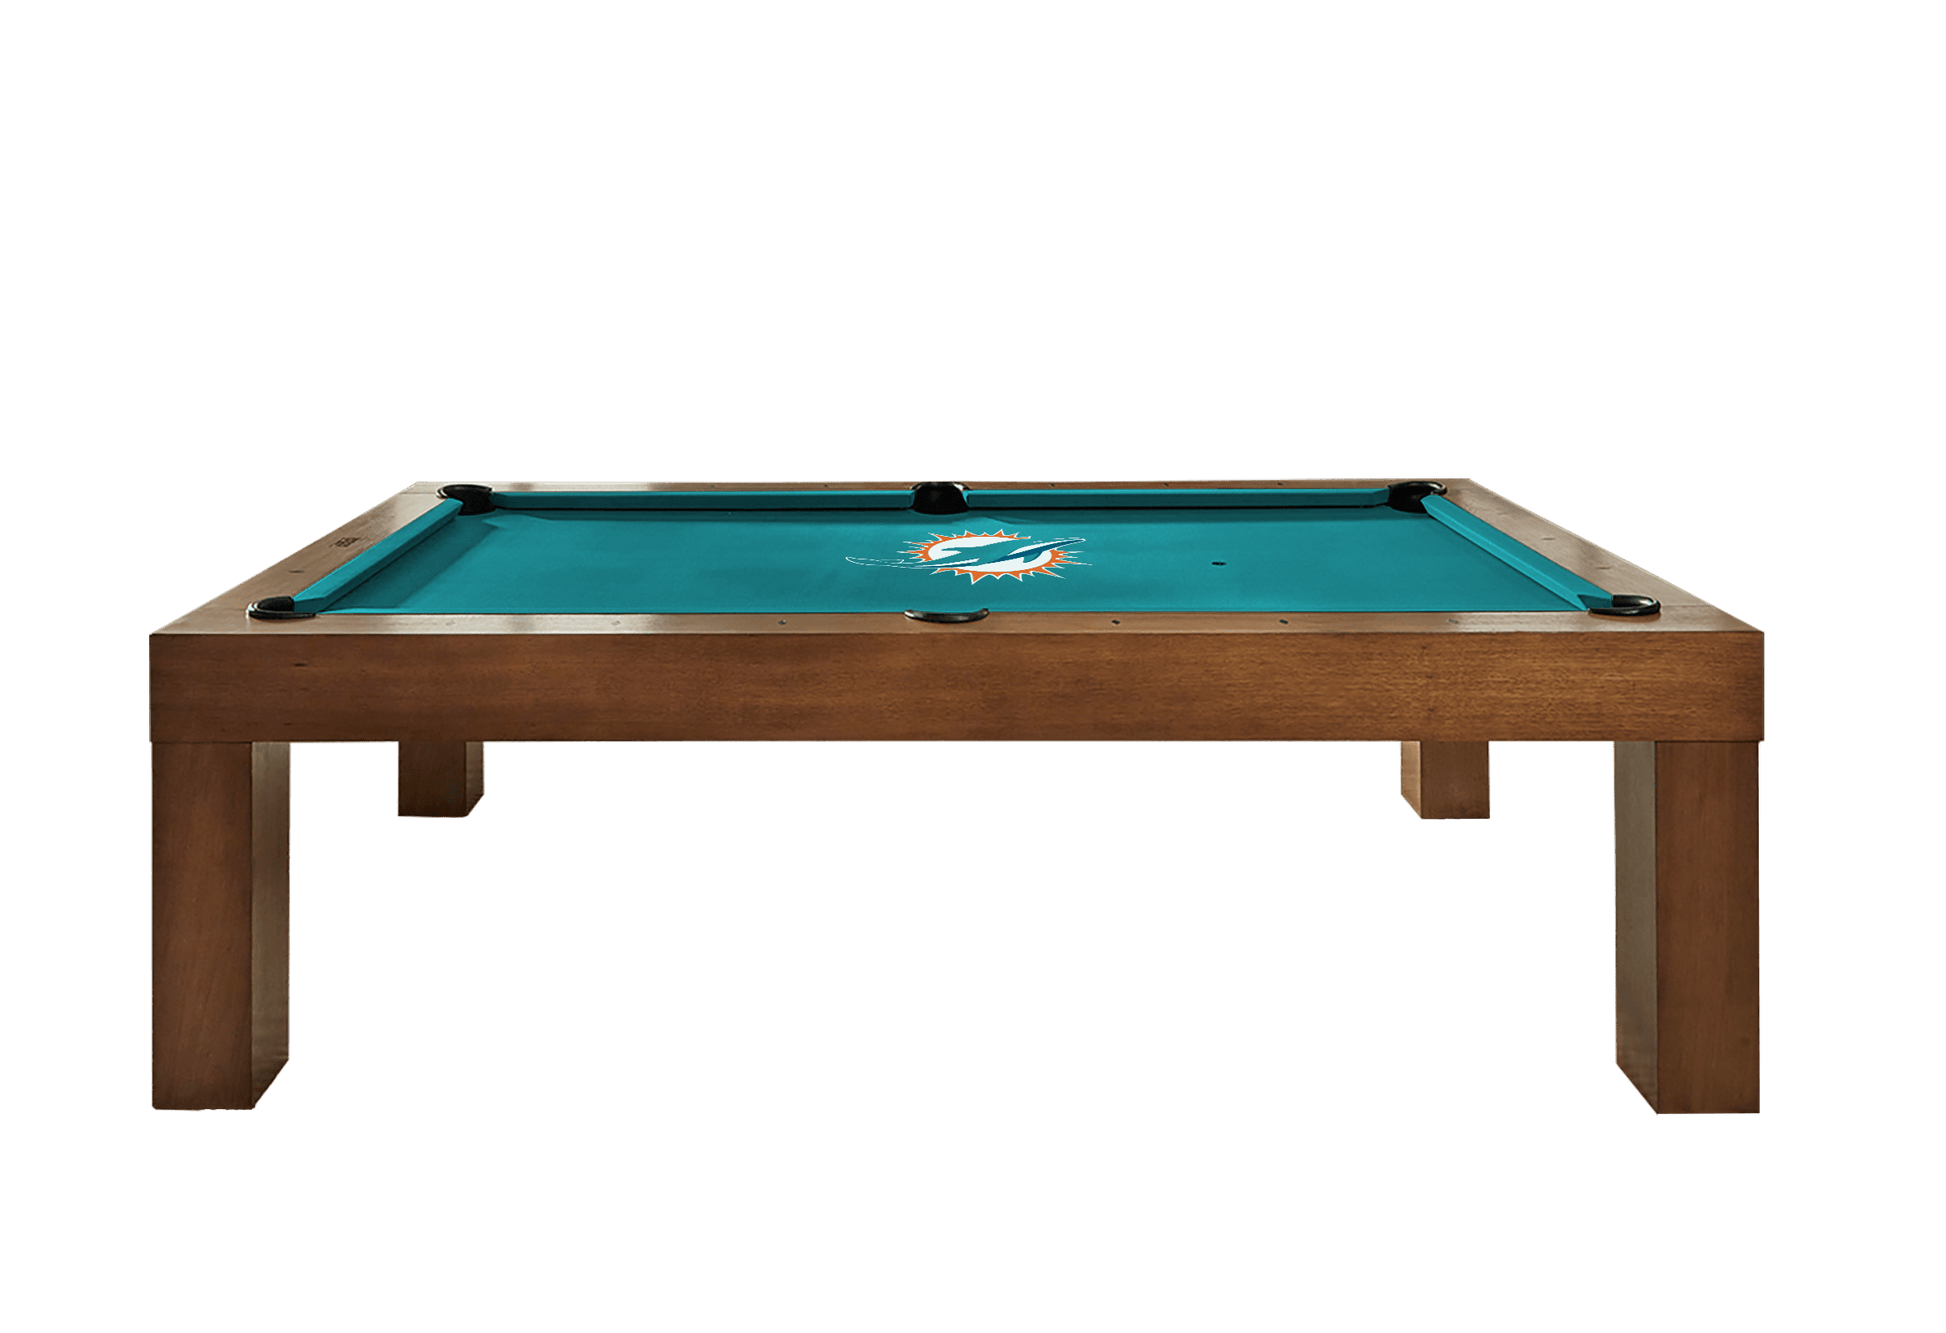 Miami Dolphins Premium Pool Table Bundle - Walnut Pool Bundle Home Arcade Games   